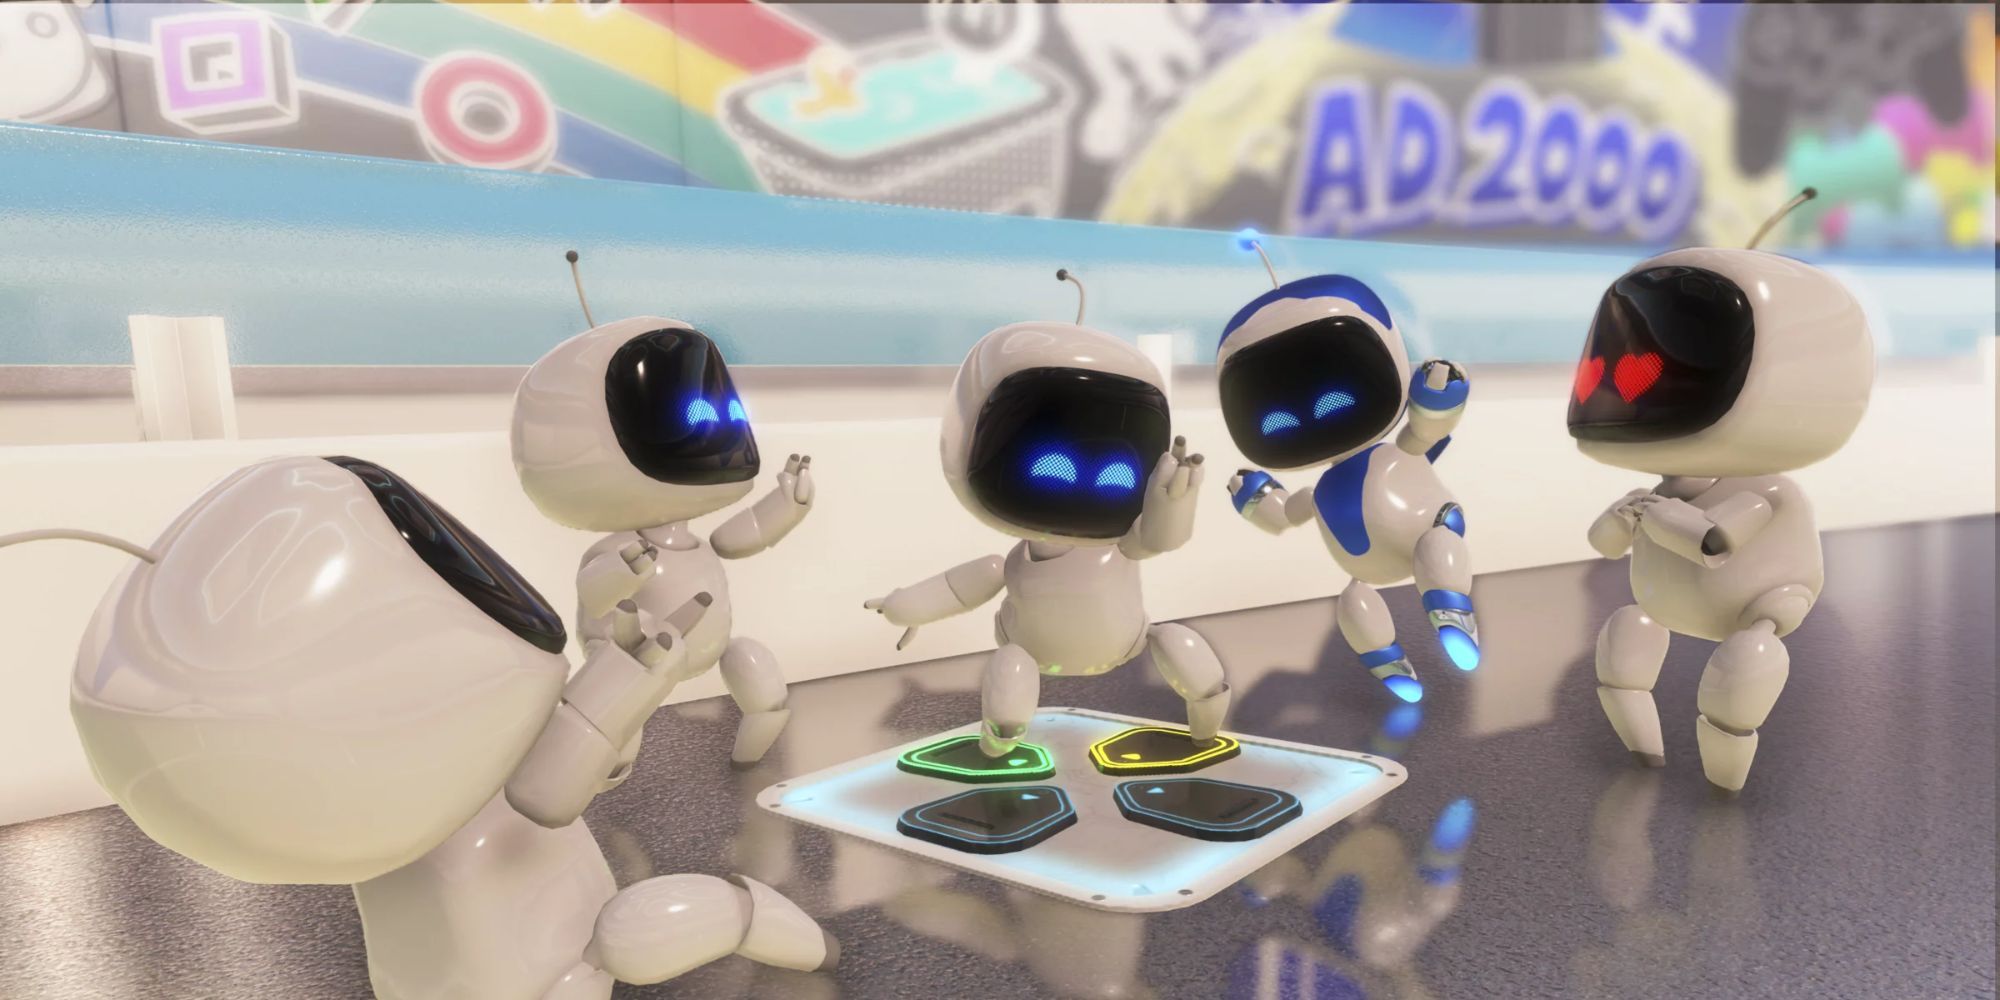 Several Astro Bots dancing in Astro's Playroom.